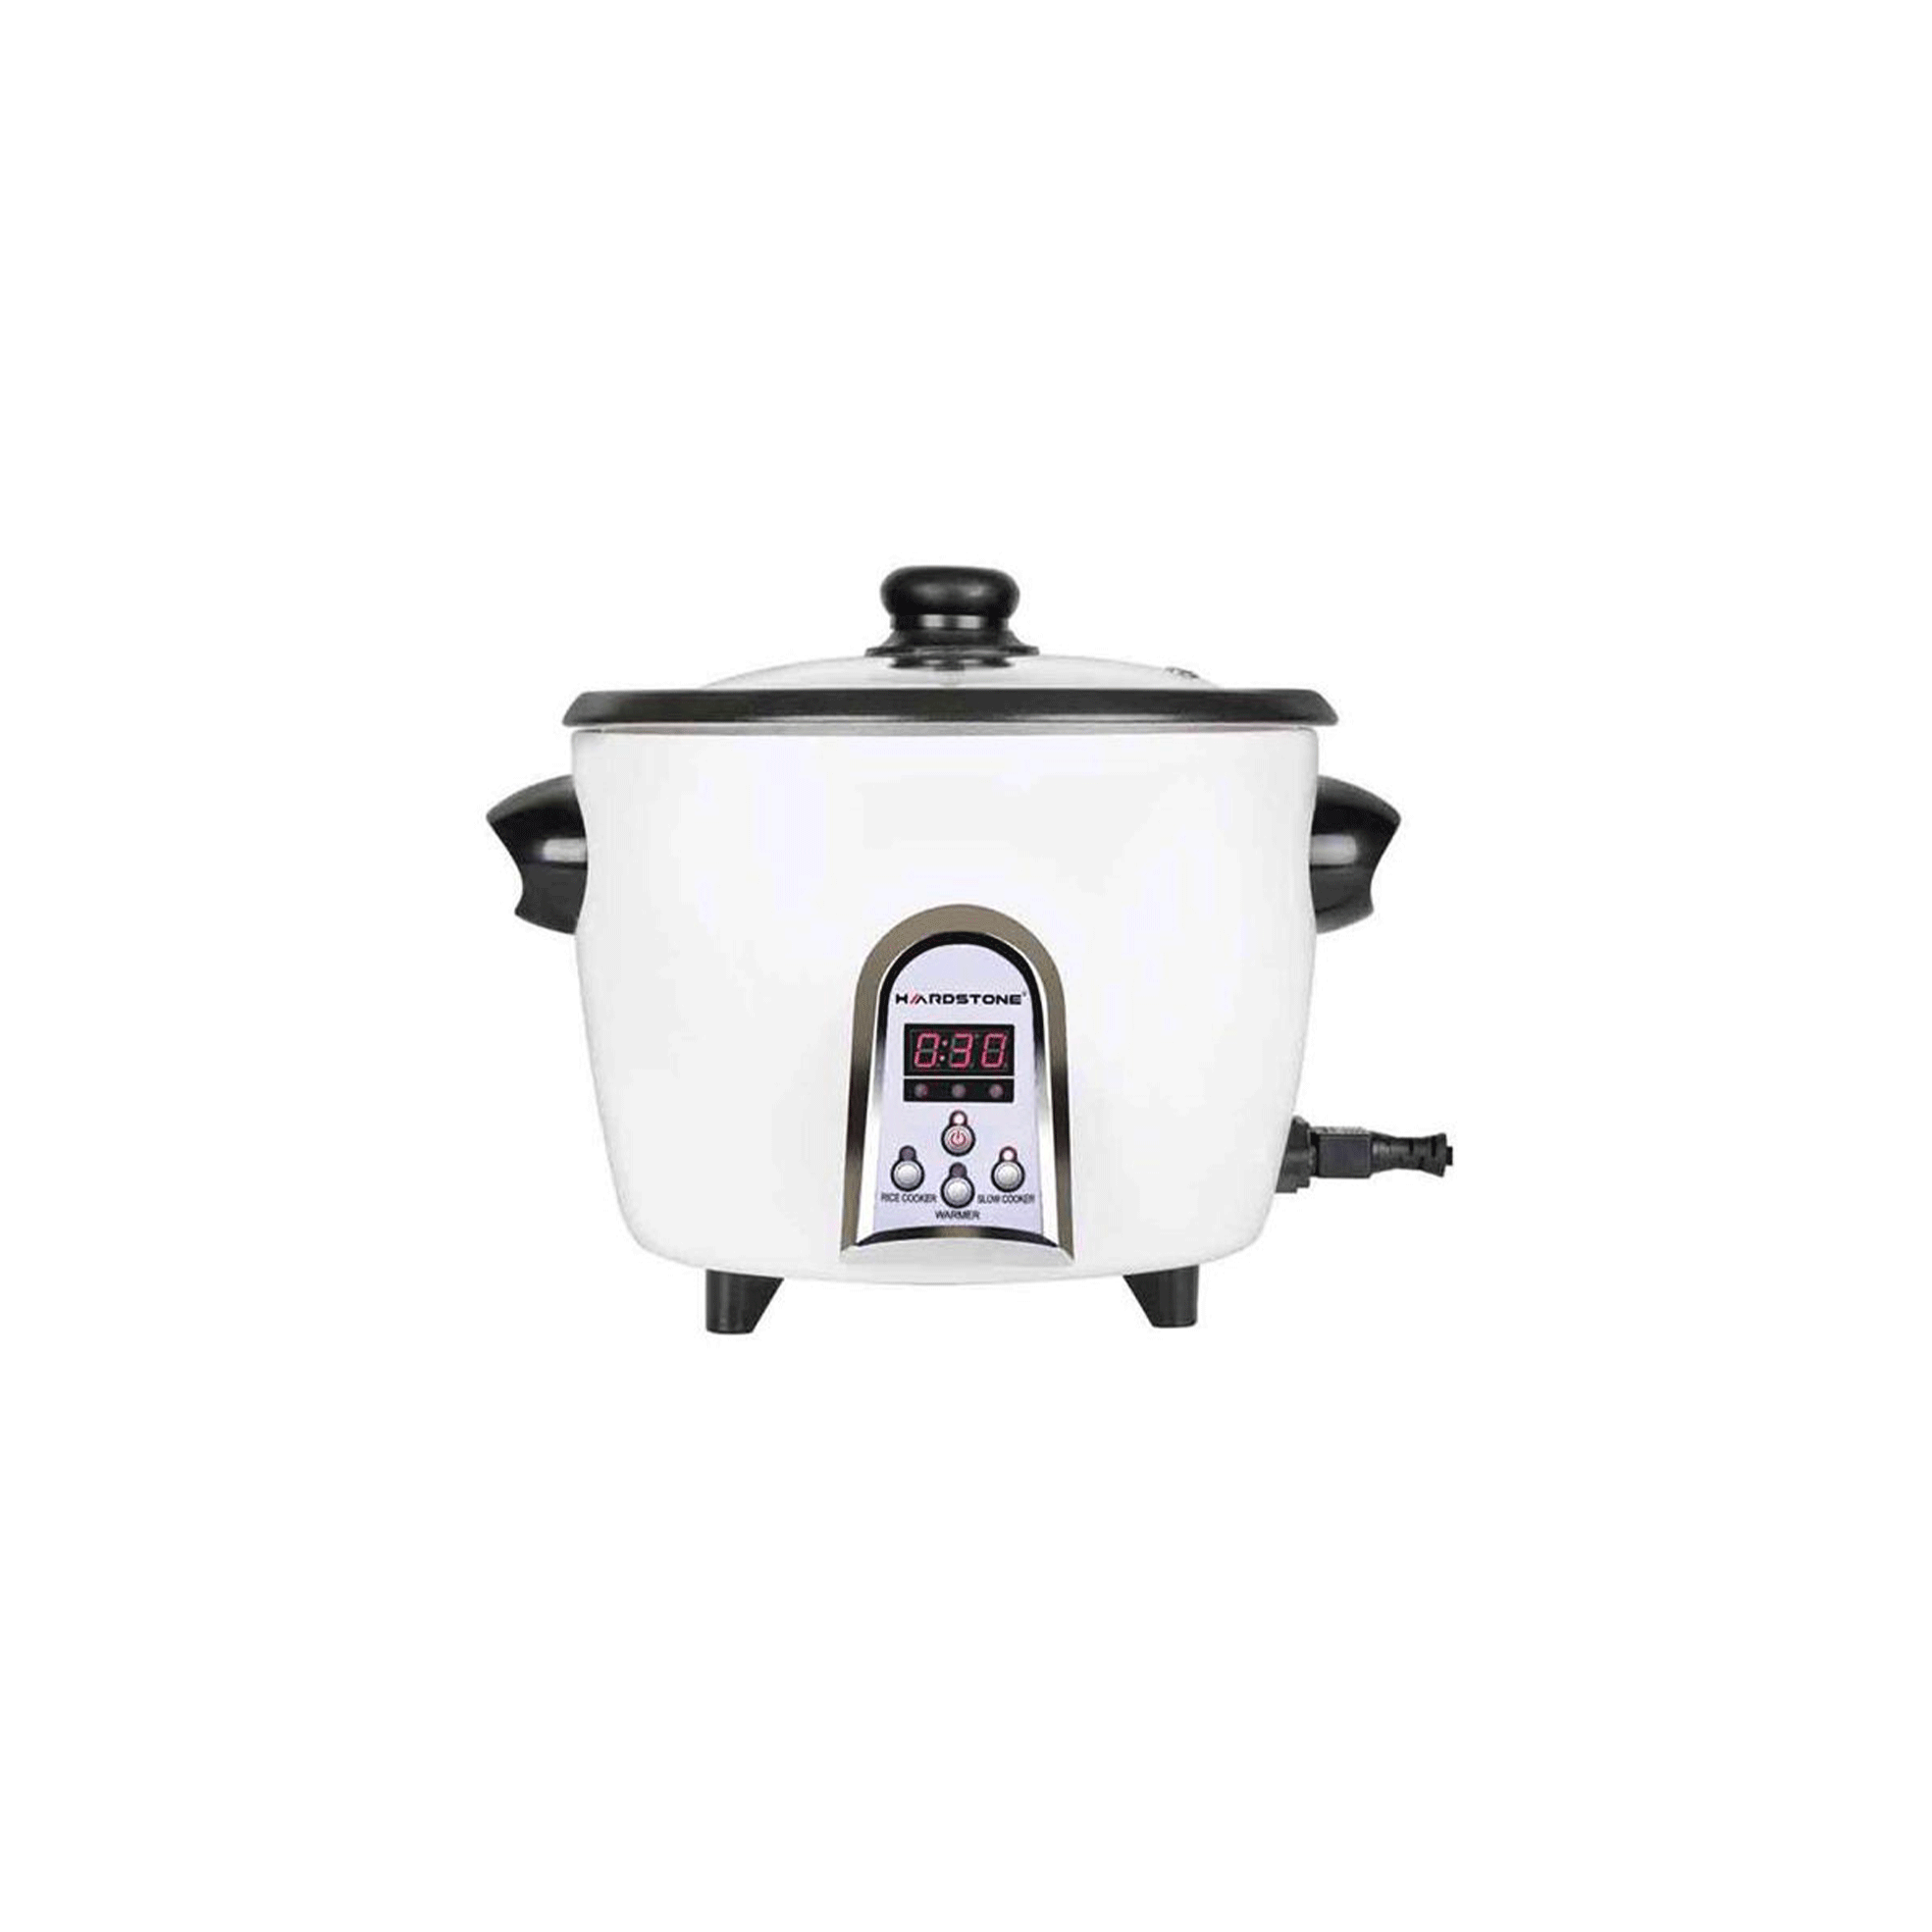 Hardstone rice cooker model RCM4310W